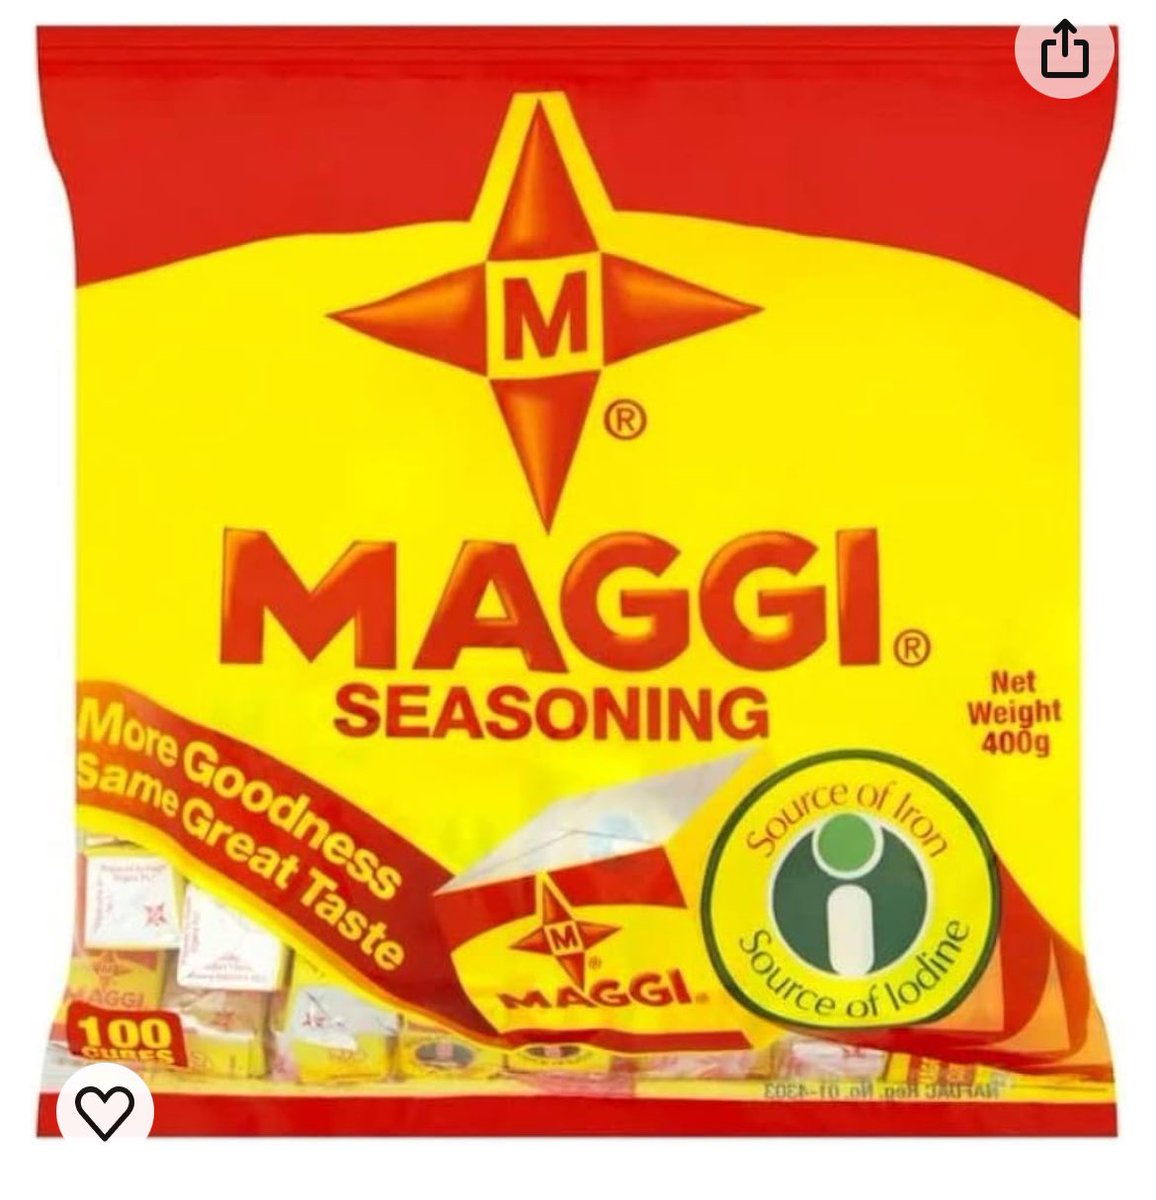 Good! I’ll add a couple maggi seasoning cubes on top 😊